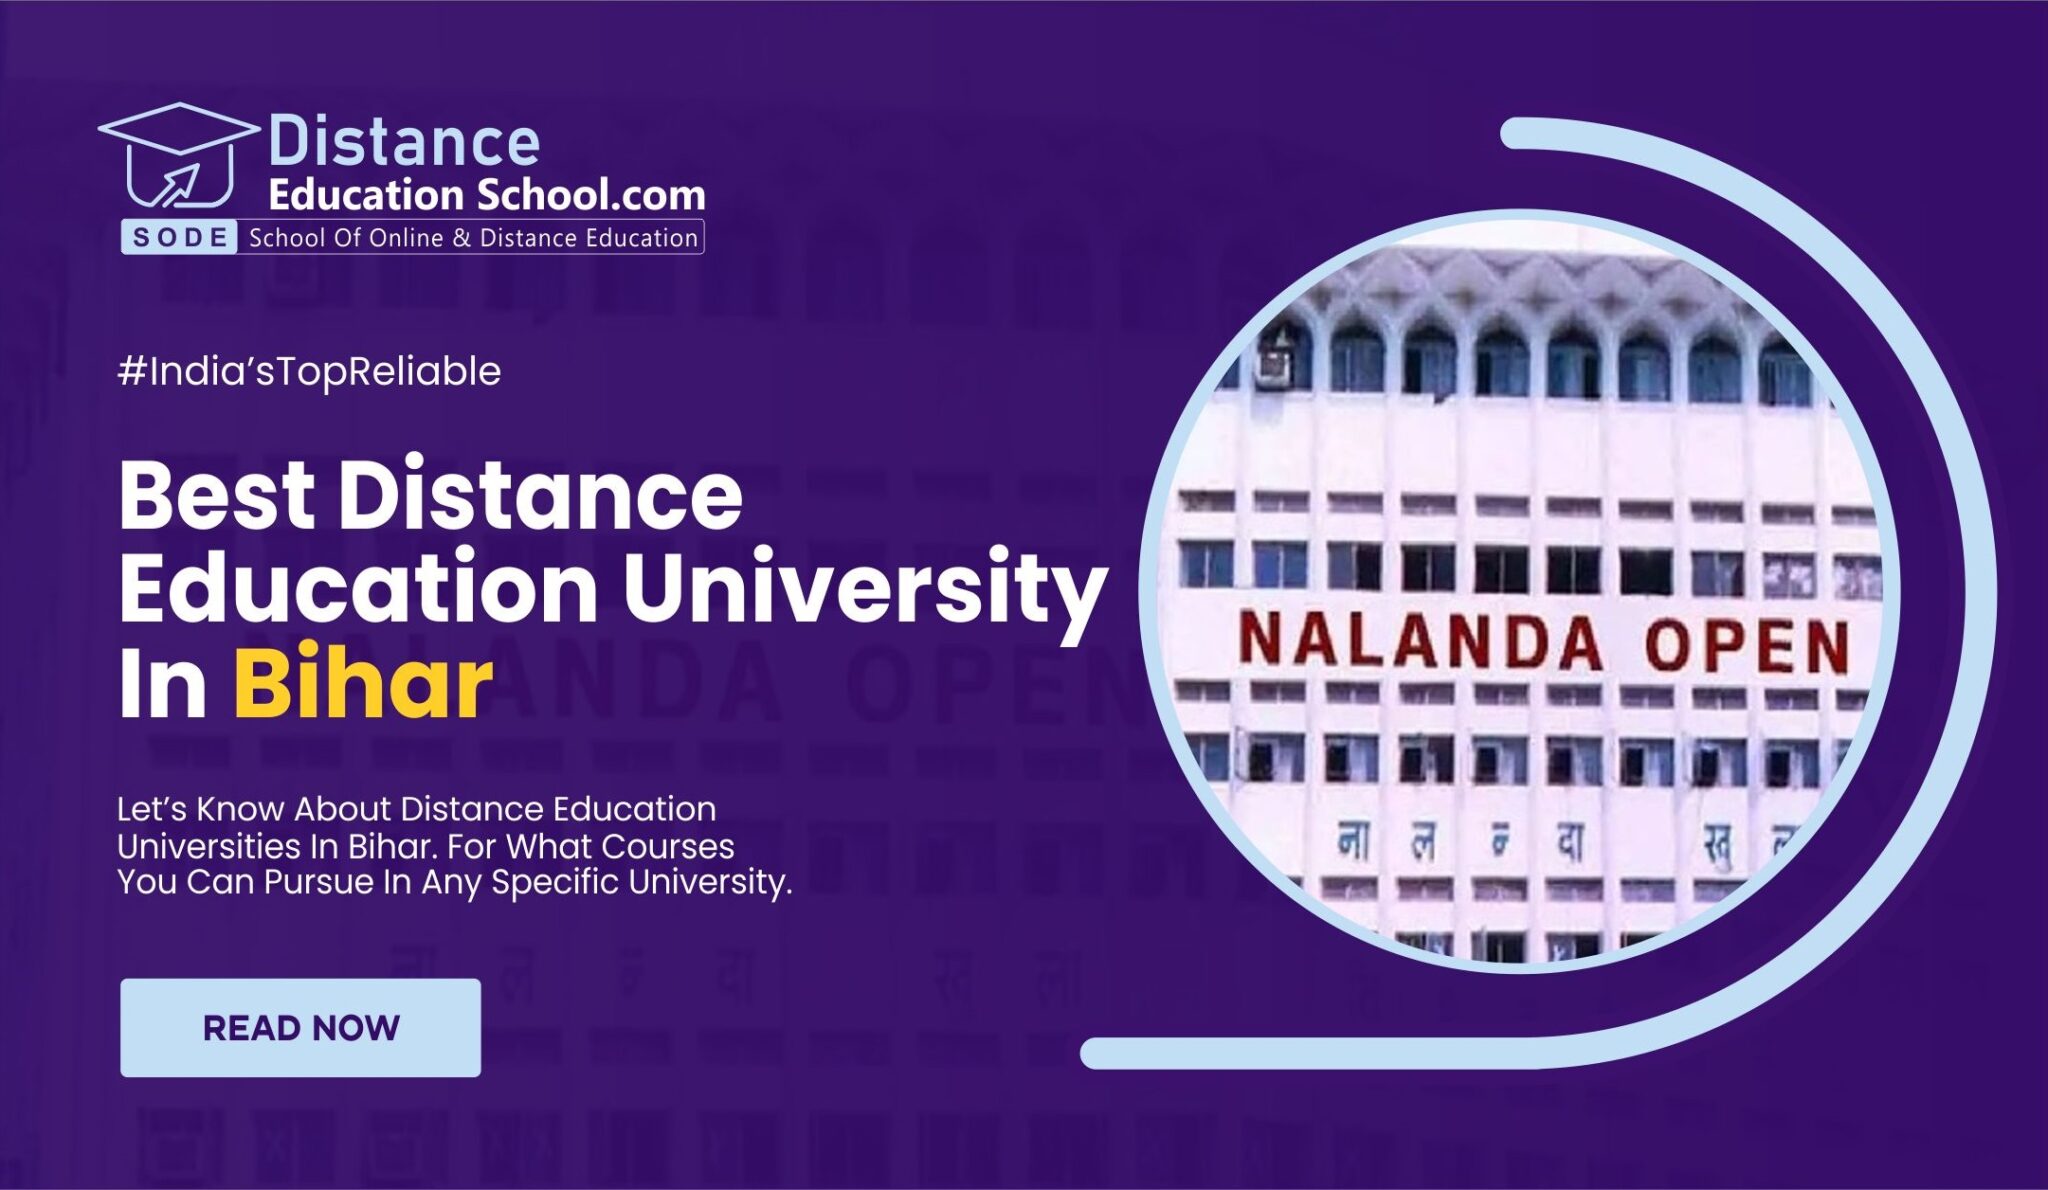 Distance Education University in Bihar